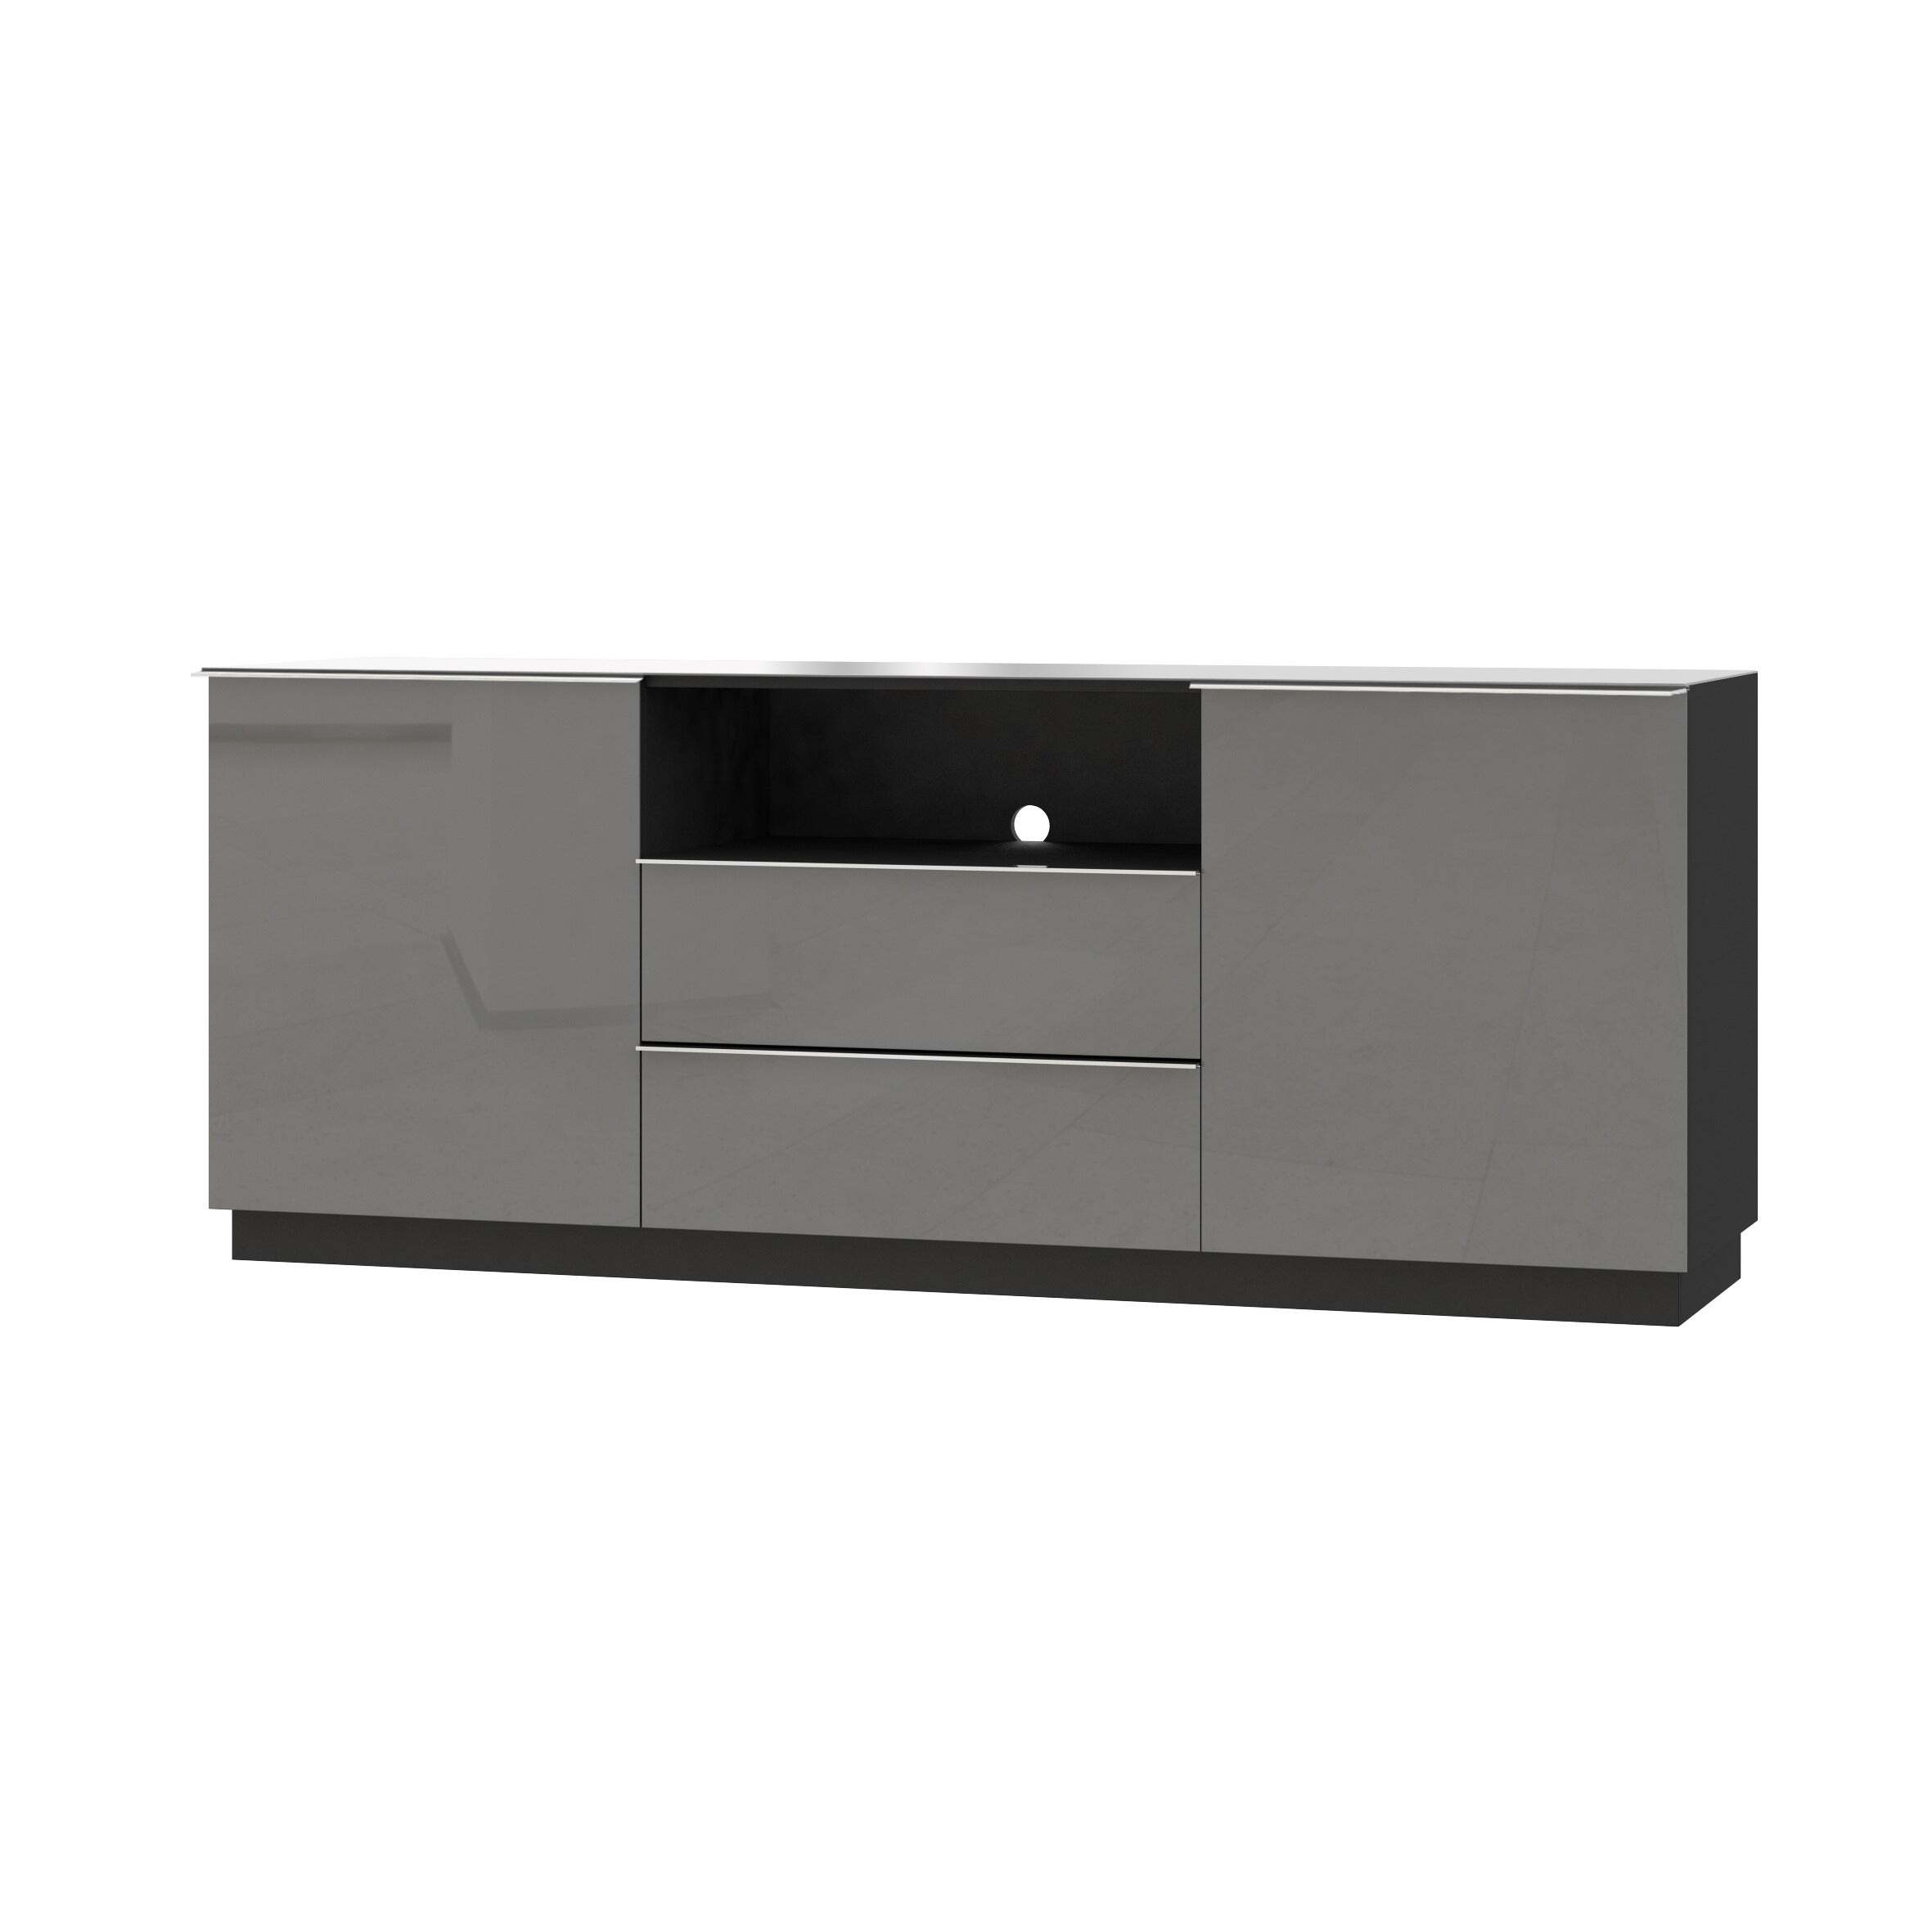 Helio 25 Sideboard Cabinet 180cm - Grey Glass 180cm - image 1